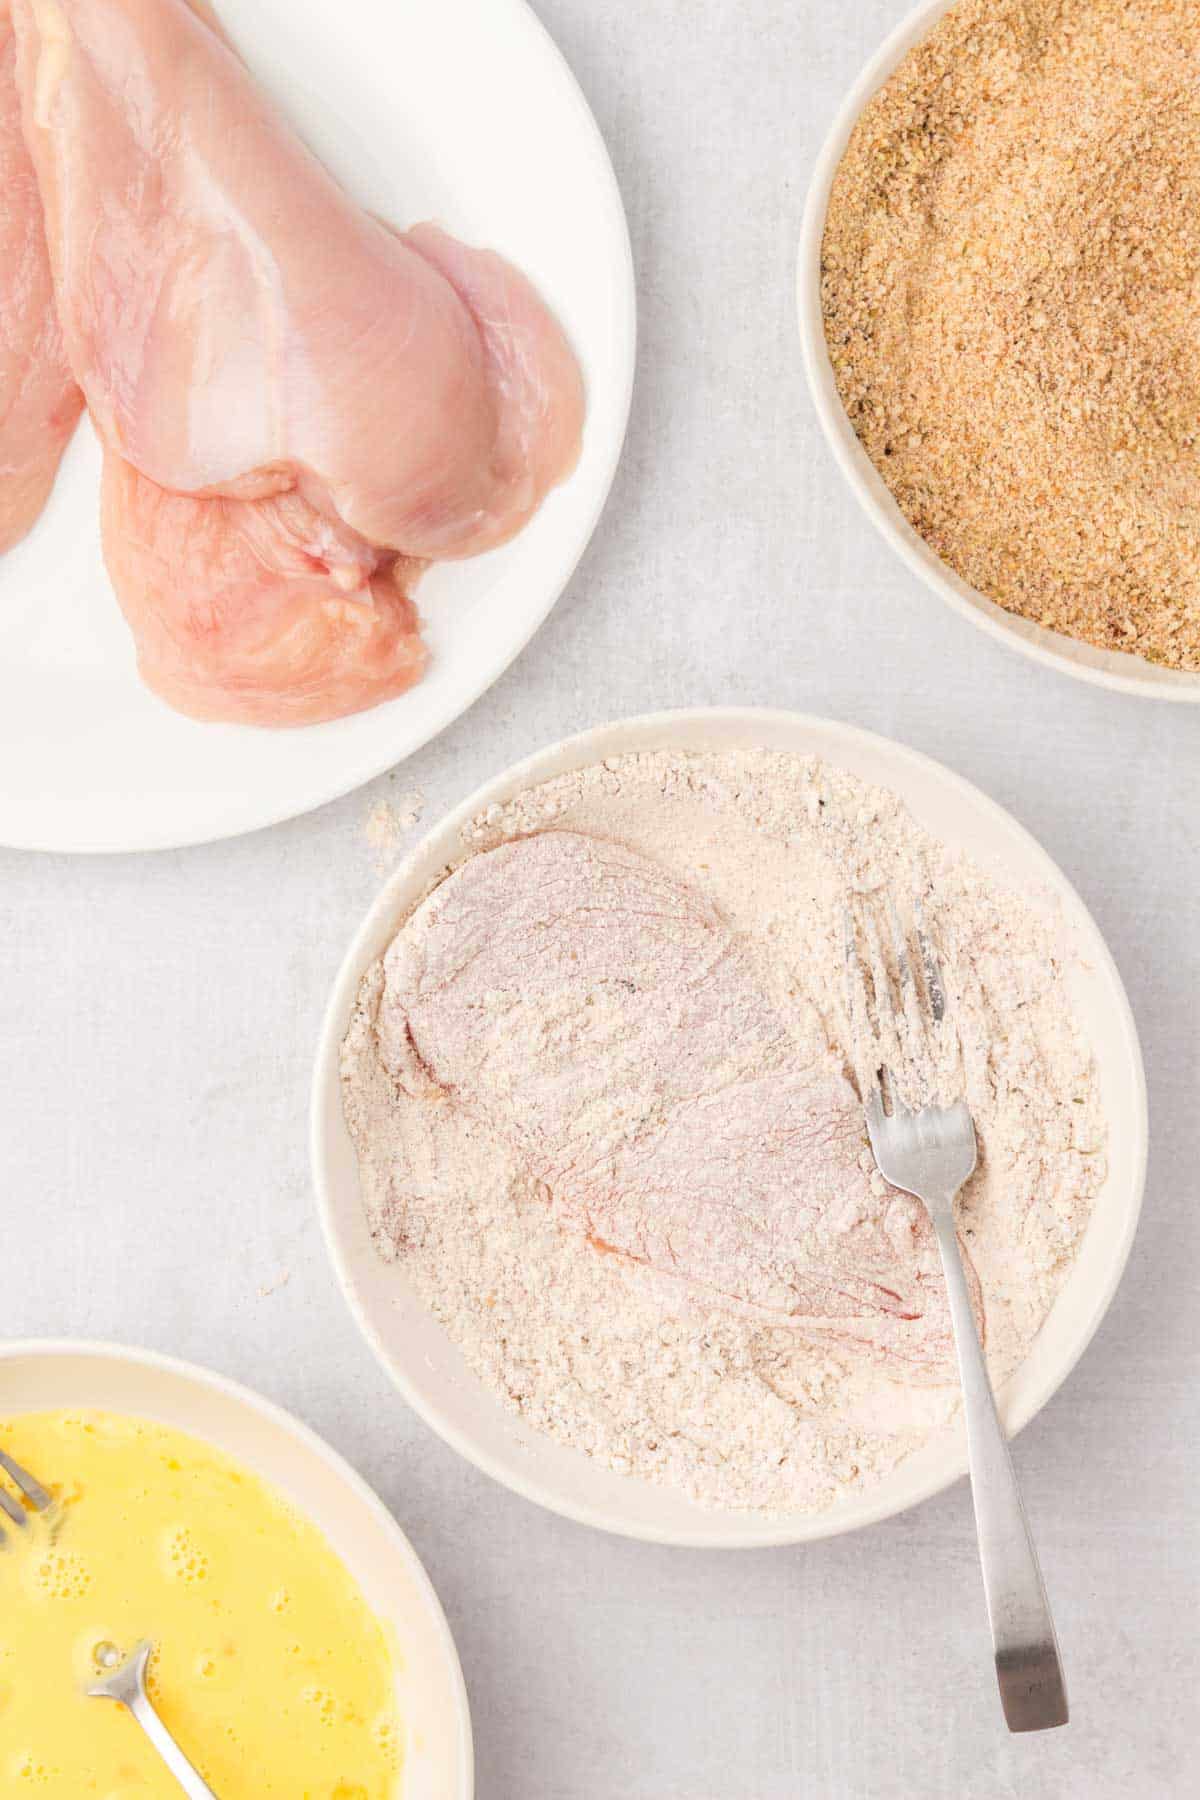 chicken breast coated in flour mixture